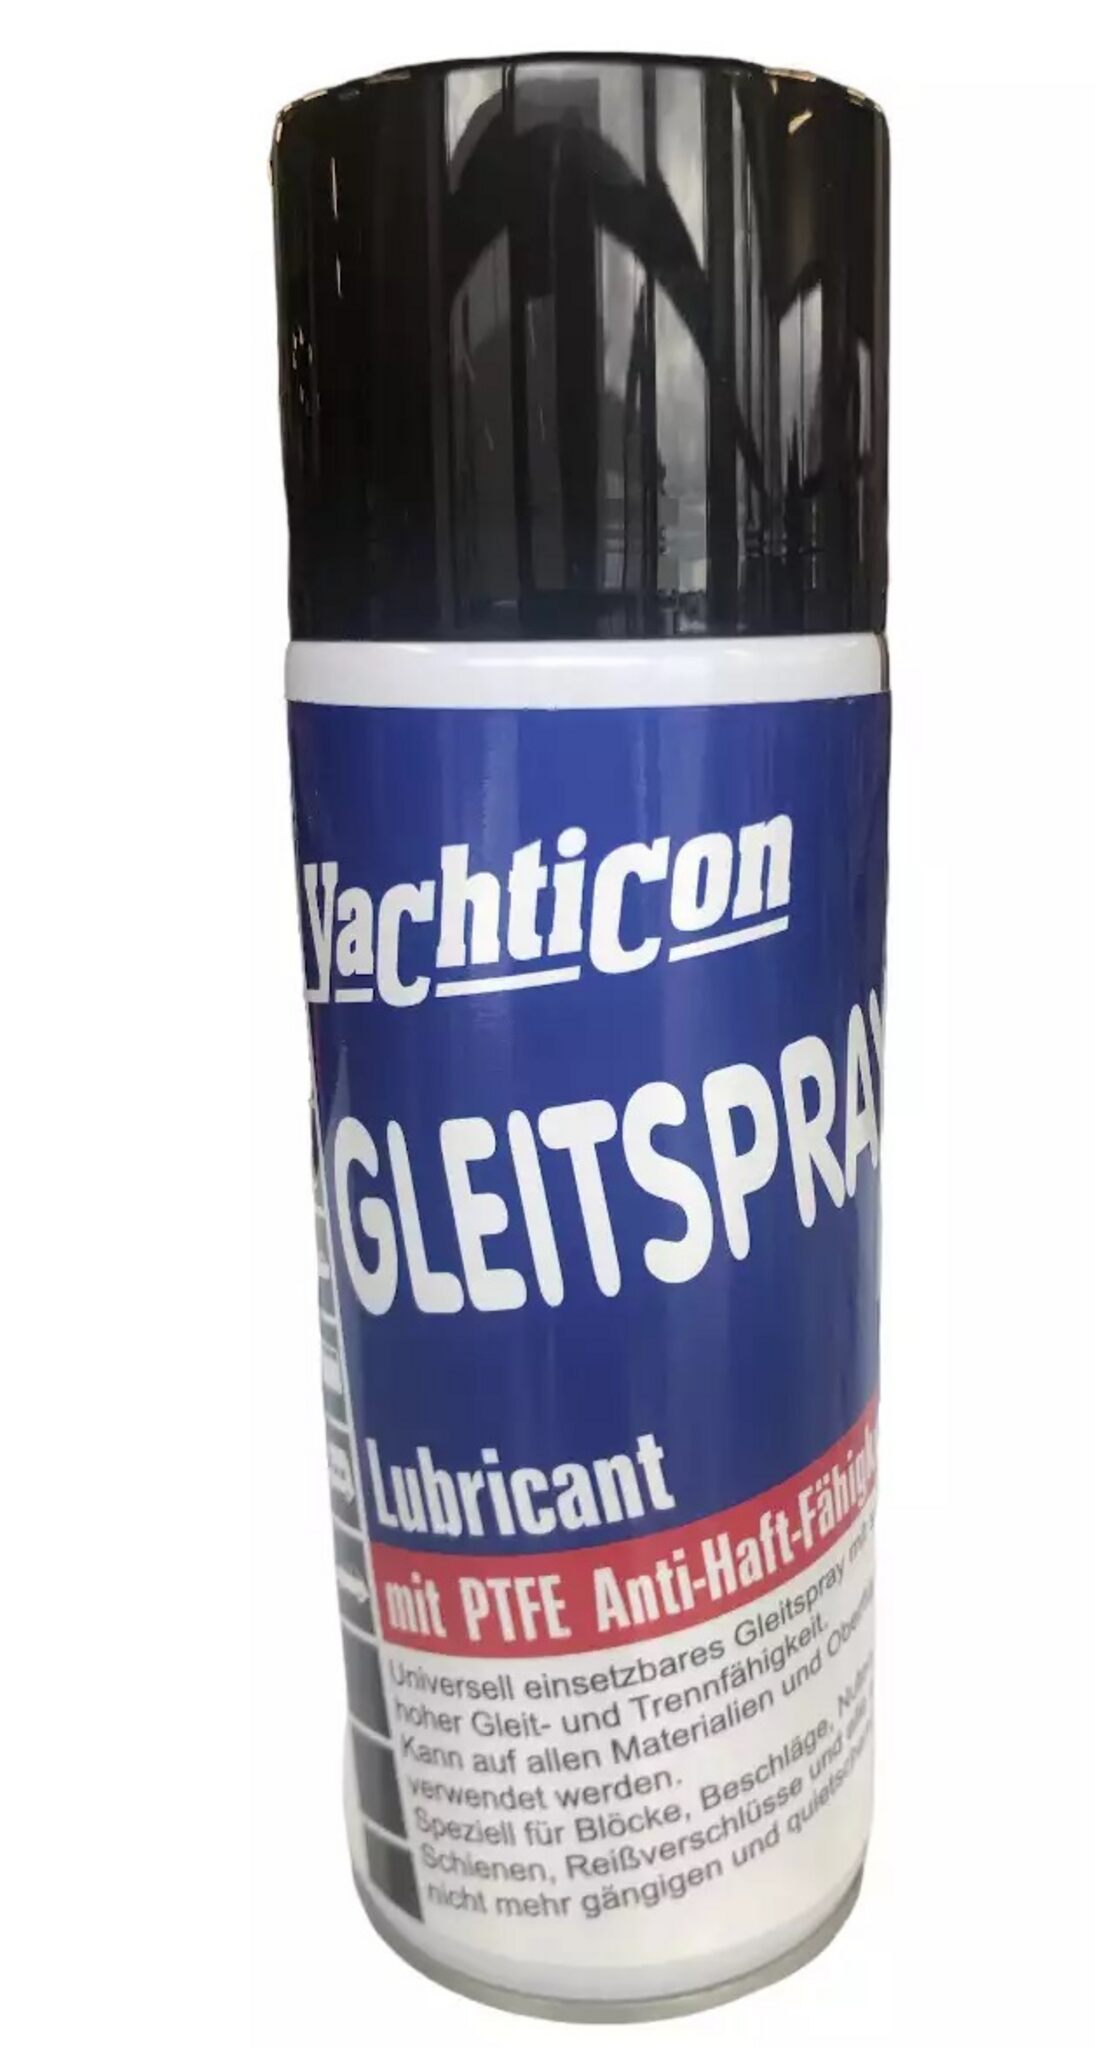 Yachticon lubricant spray